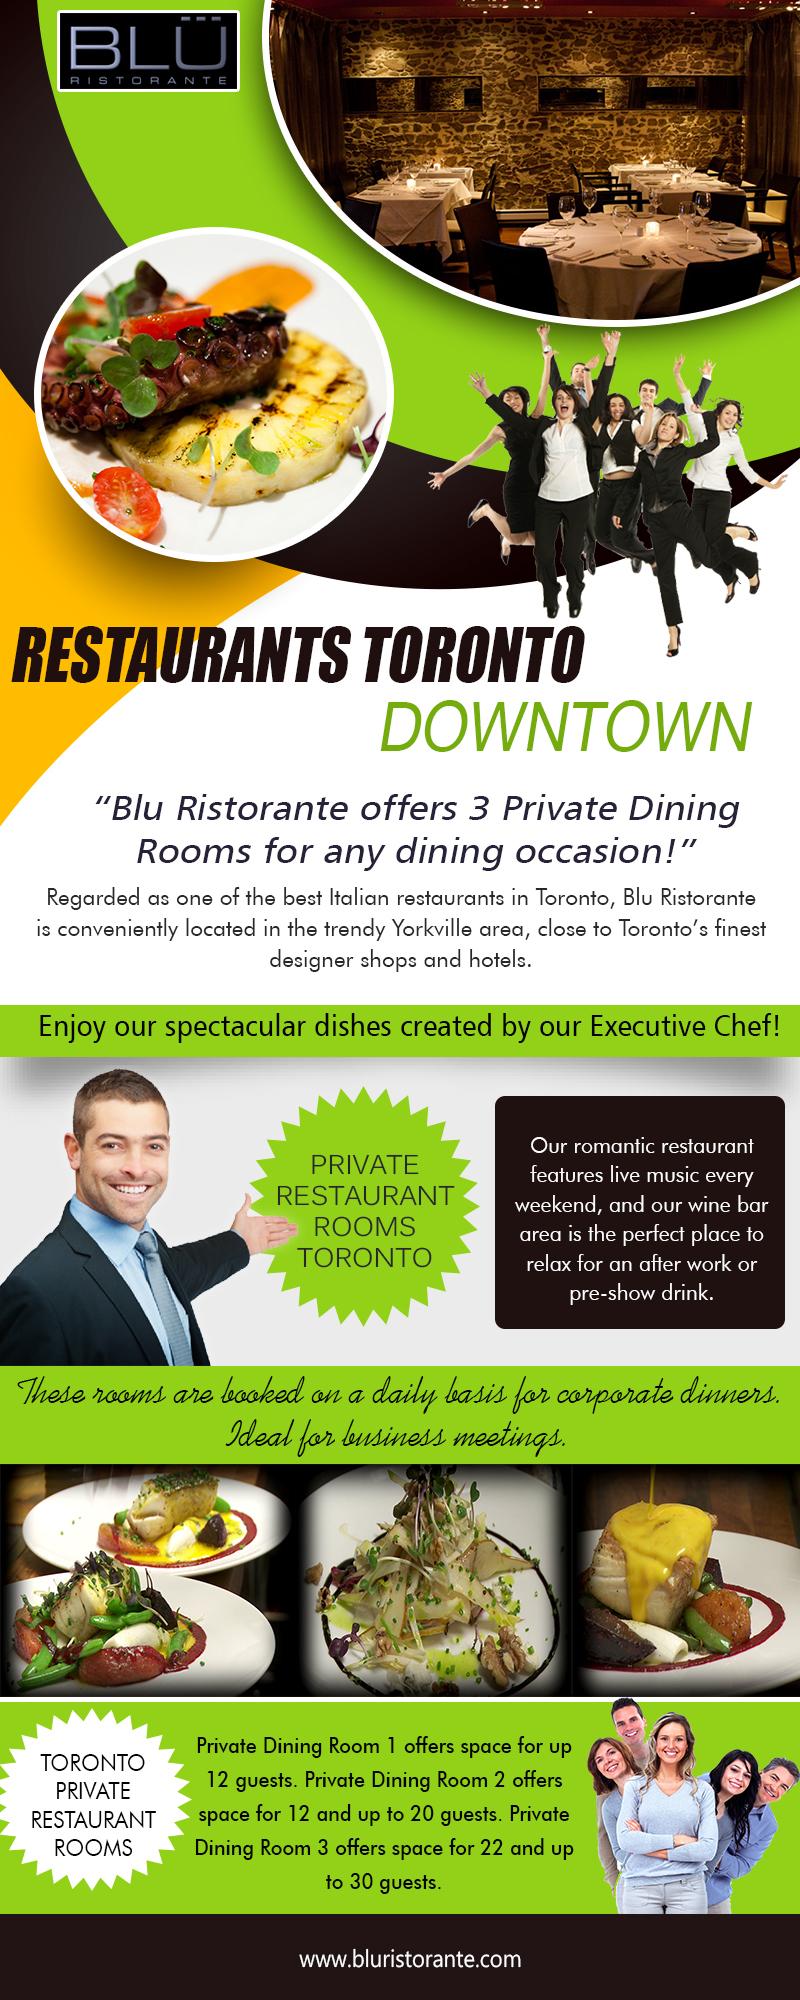 Toronto private restaurant rooms